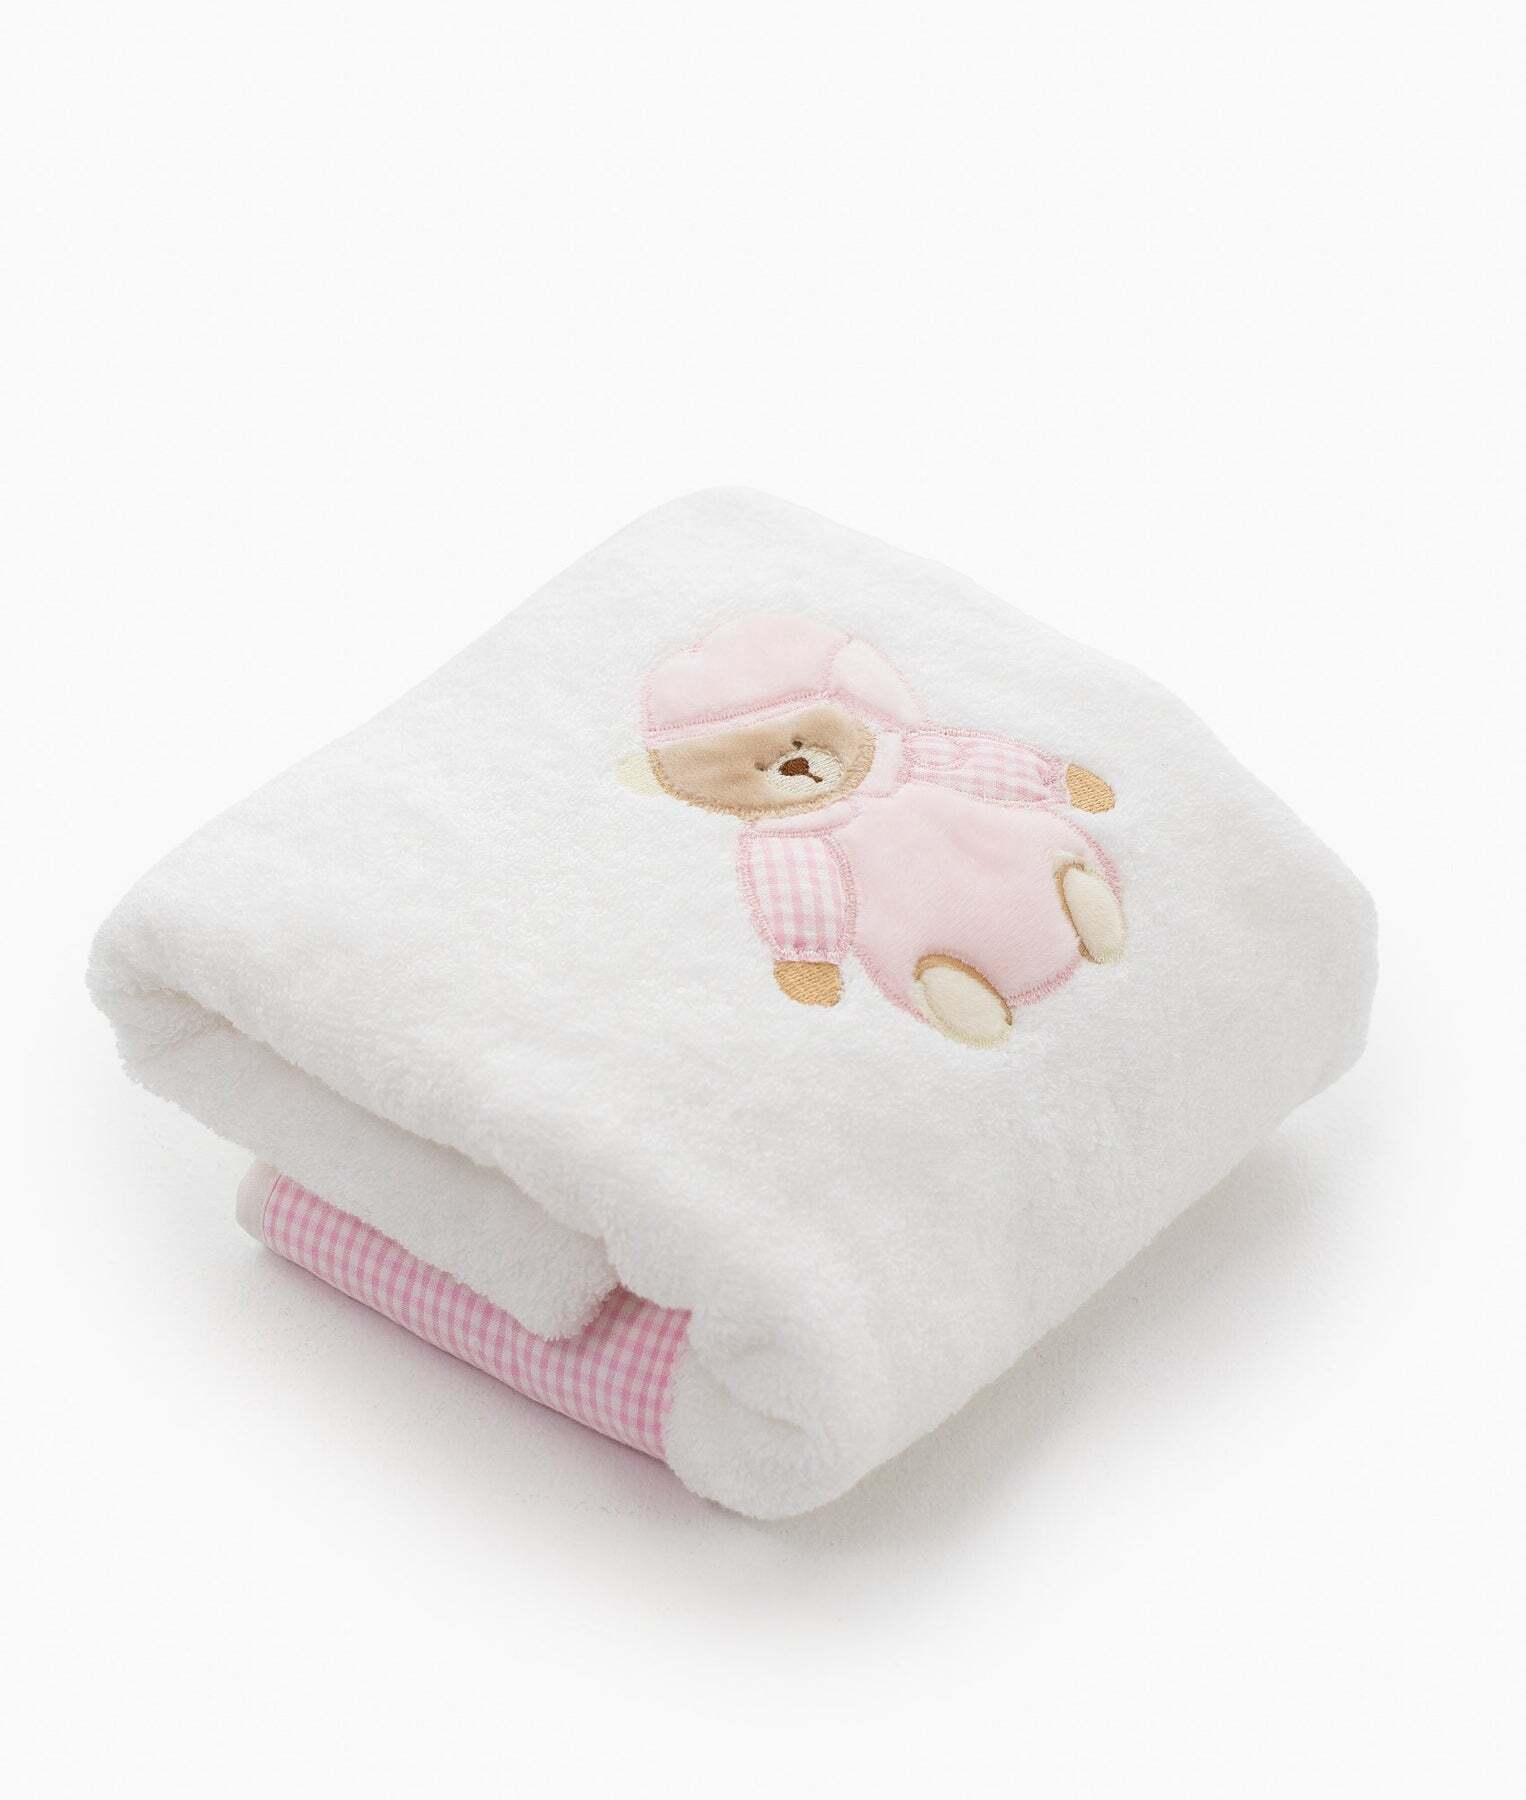 bear-towel-rattle-set-pink-513_1800x1800